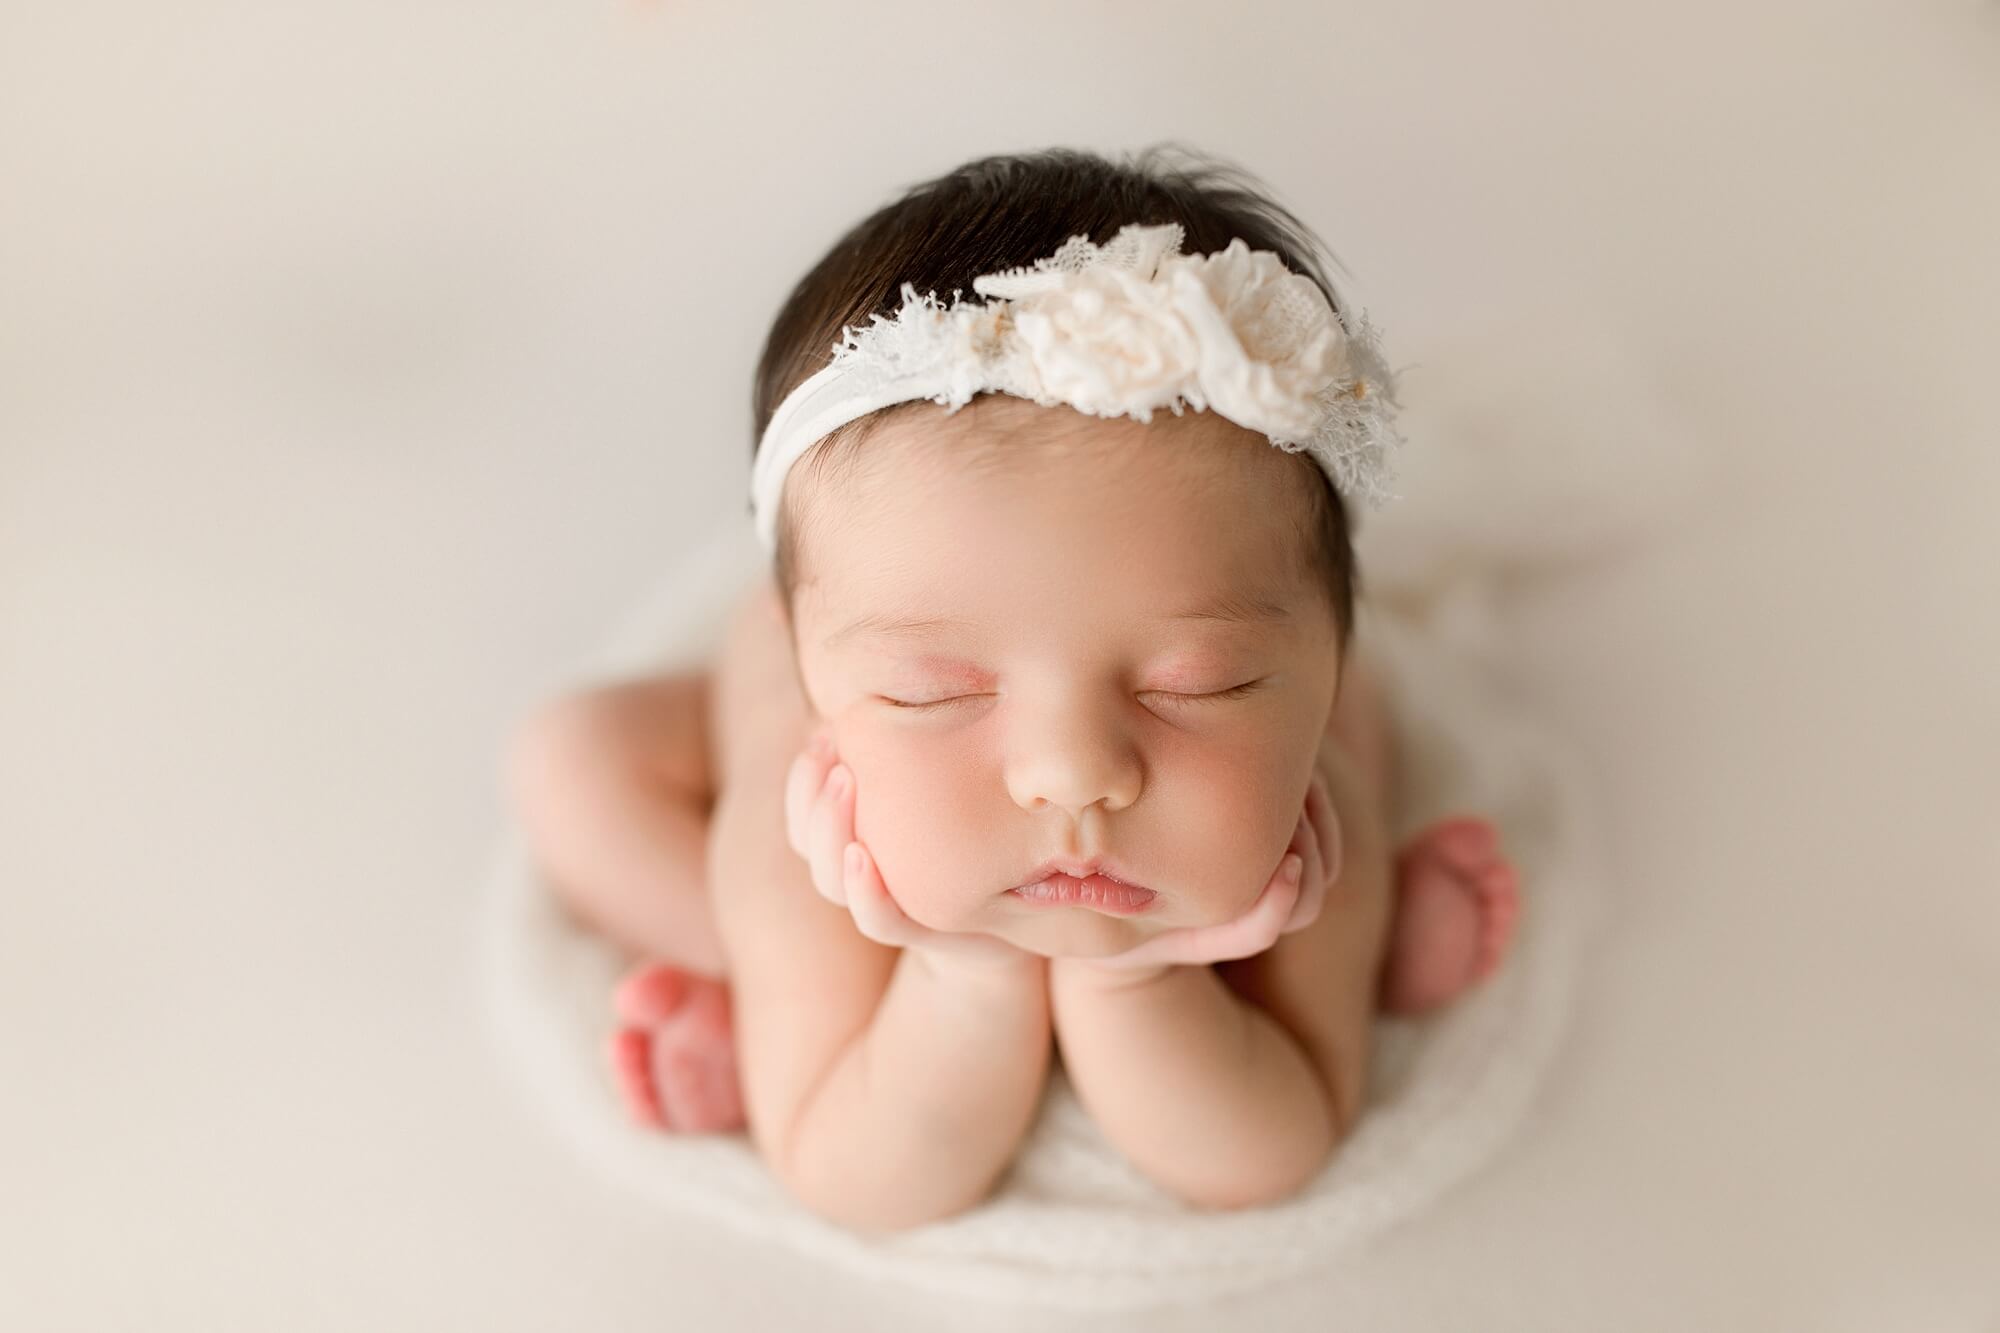 issaquah newborn photographer | baby girl r